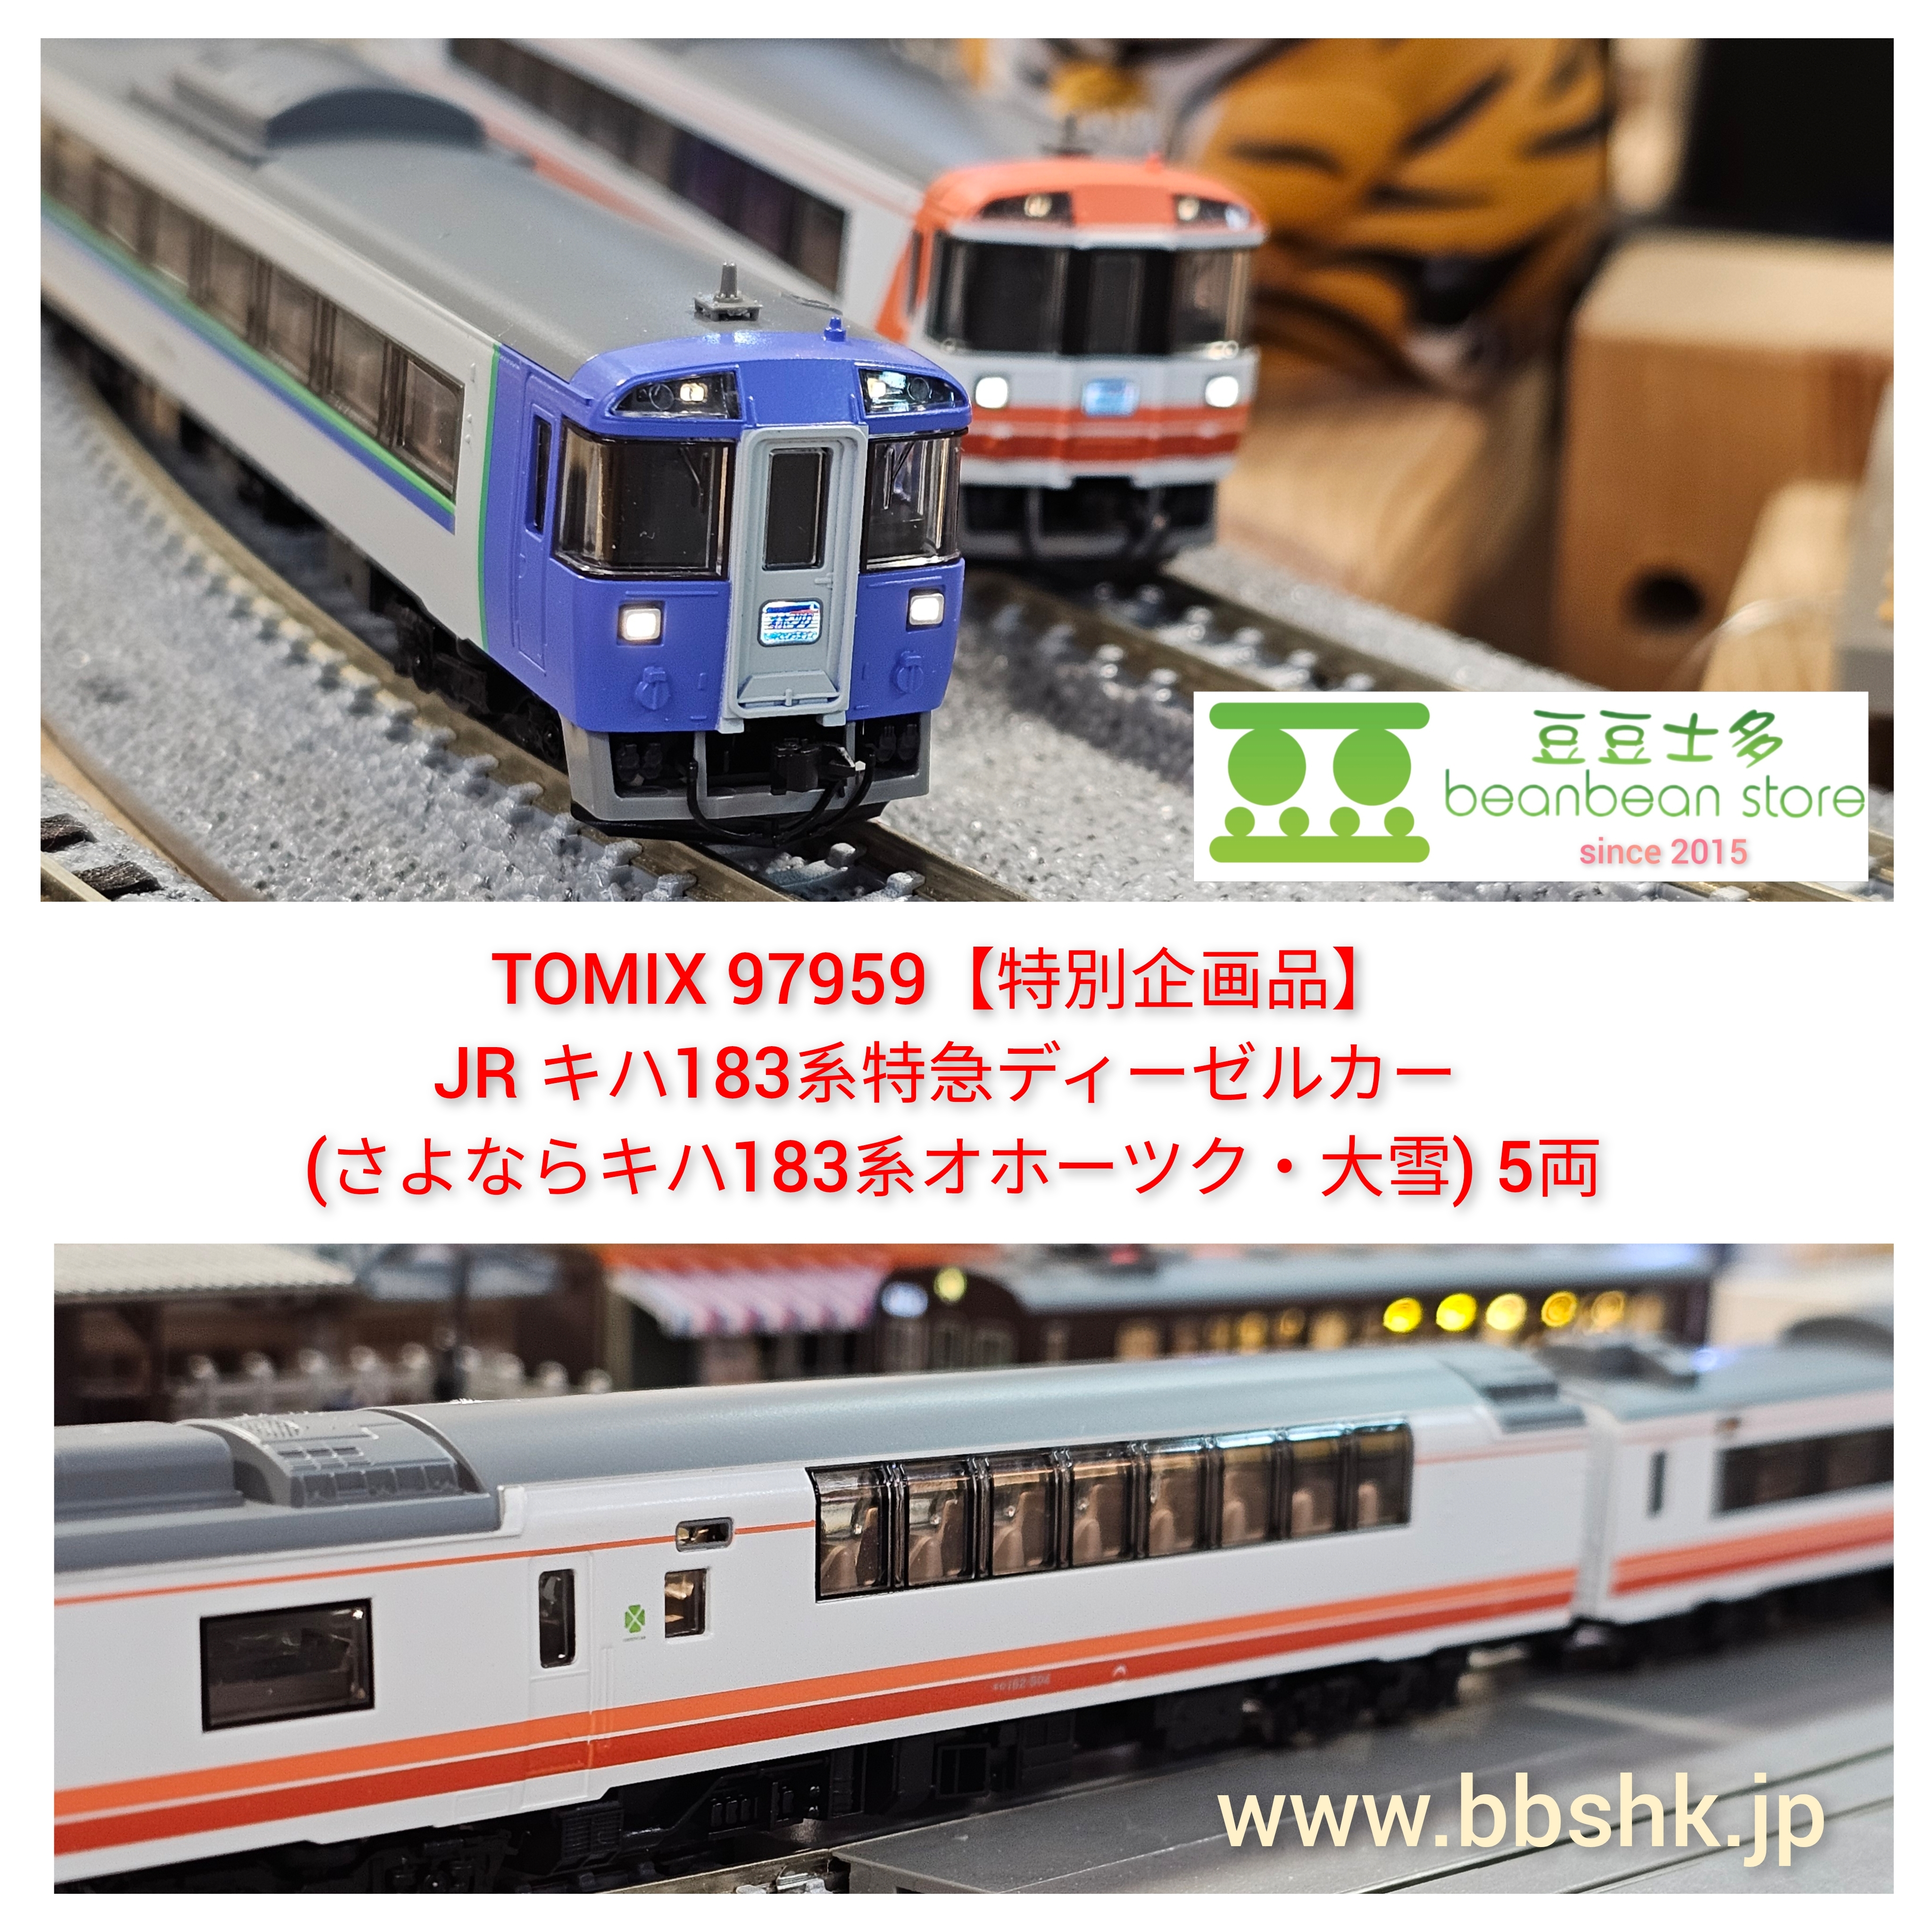 TOMIX 97959【特別企画品】 JR キハ183系特急 (さよならキハ183系 